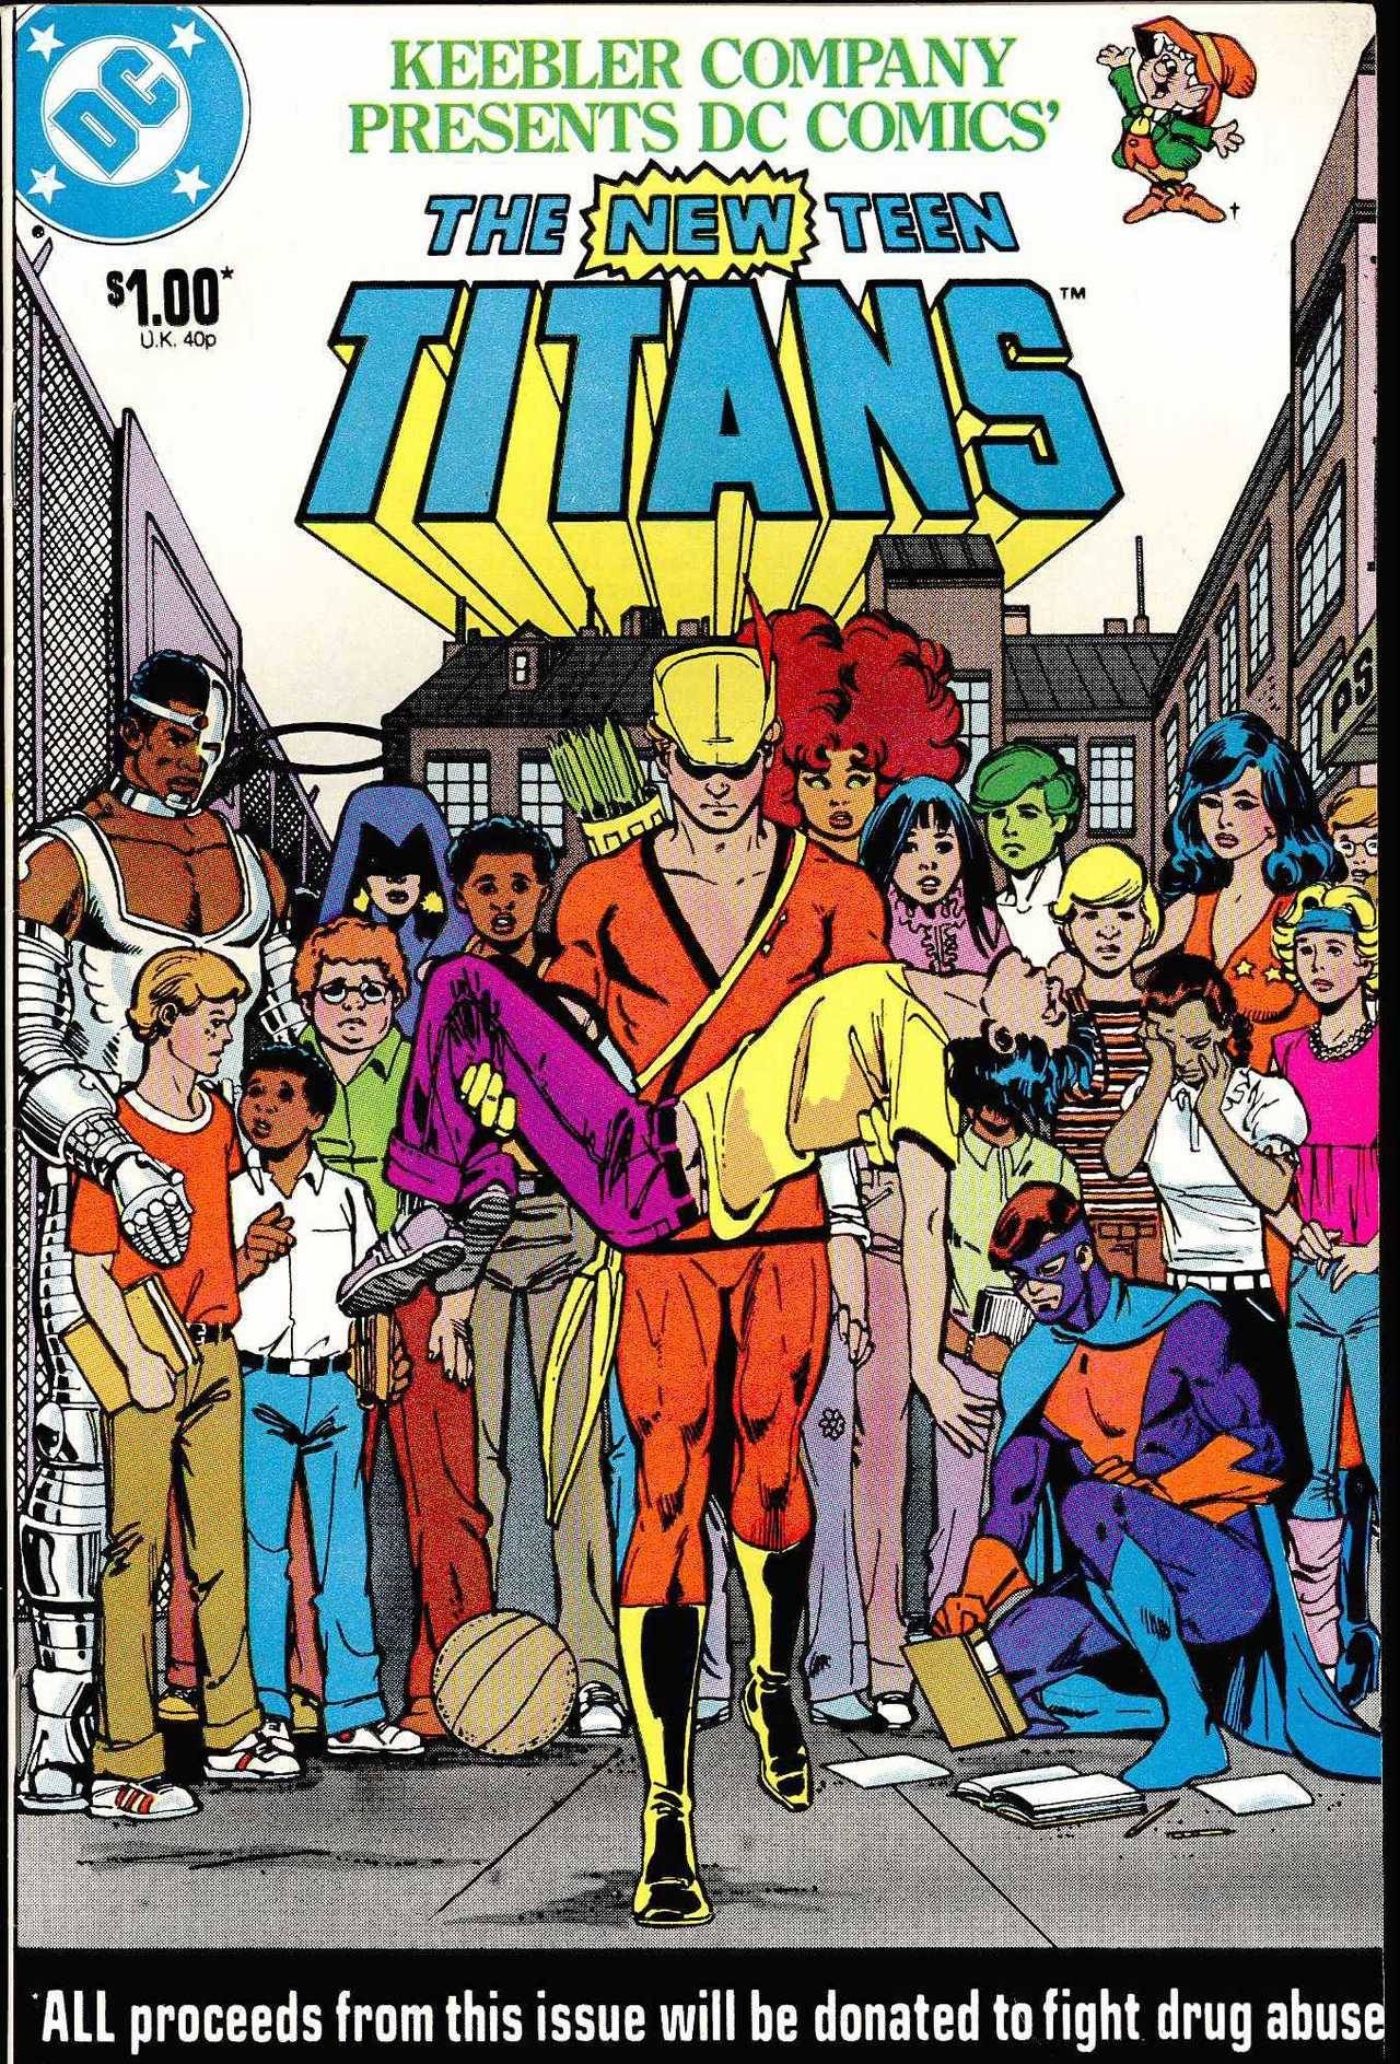 New Teen Titans Anti-Drug comic